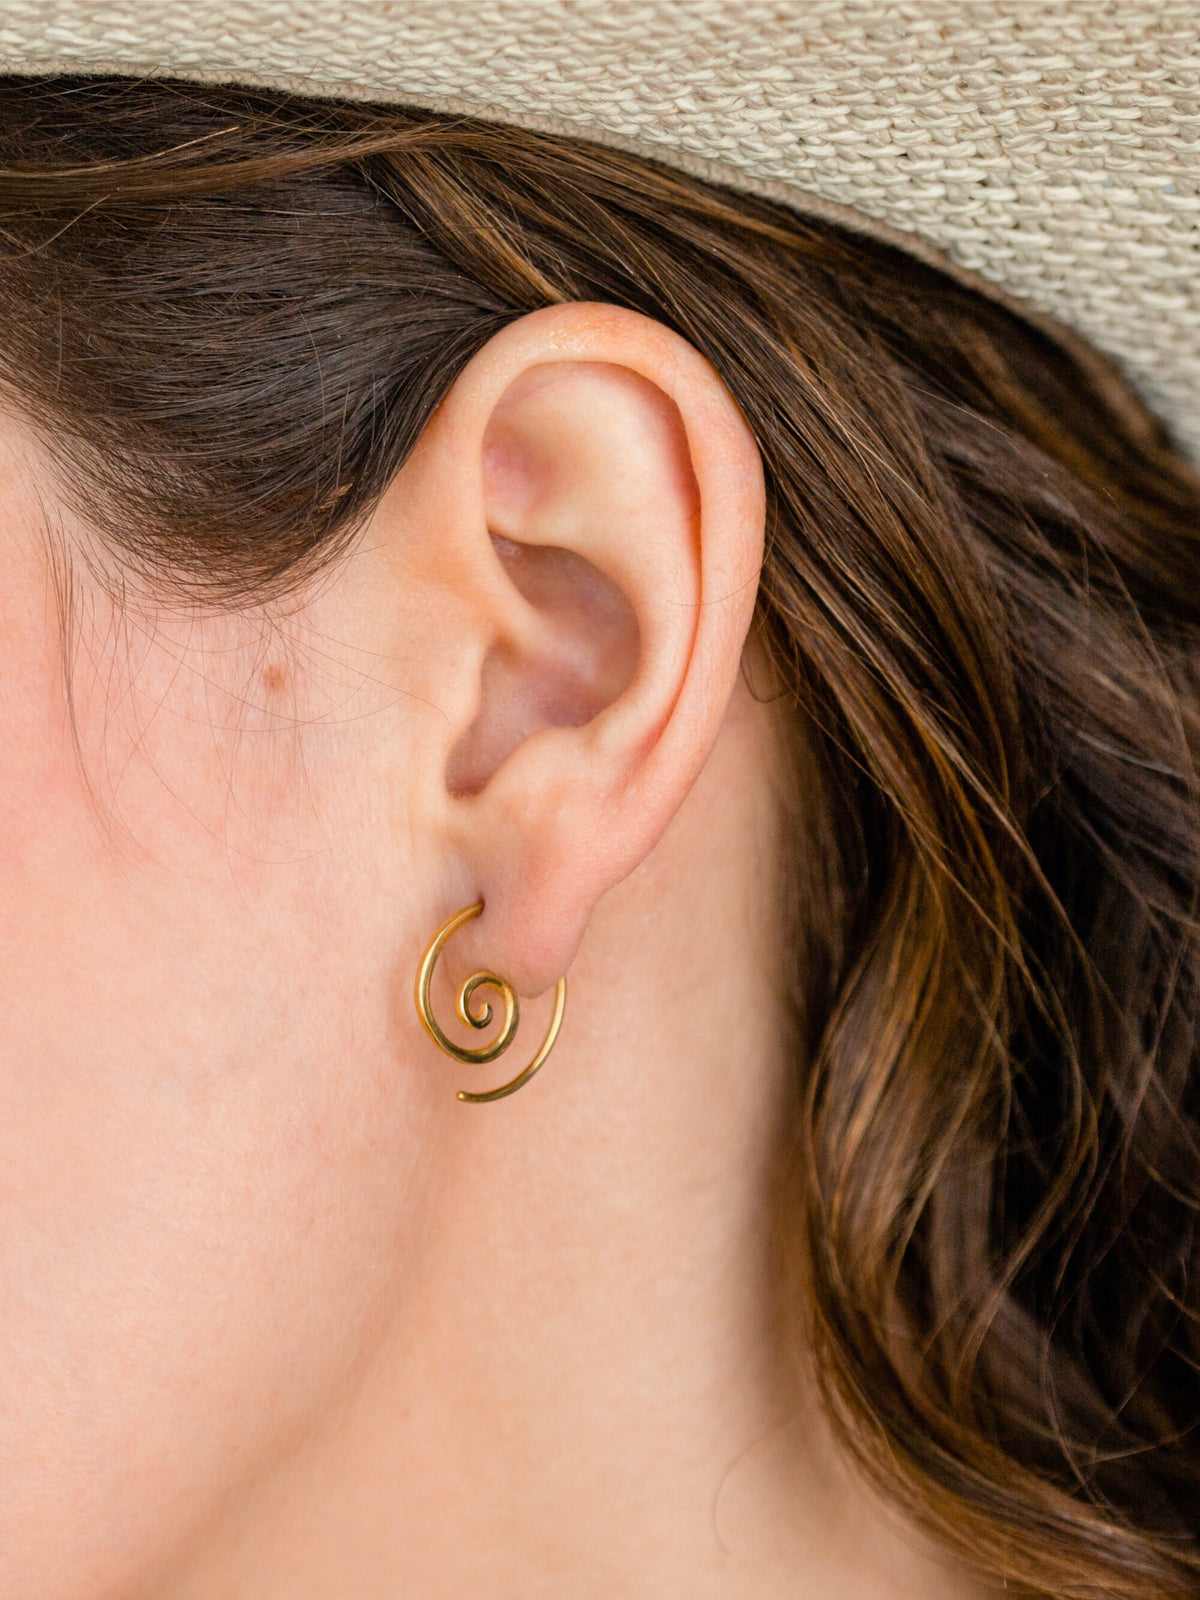 Tiny Gold Spiral Earrings - Sleeper Hoop Earrings - 14K Gold-plated (g236)